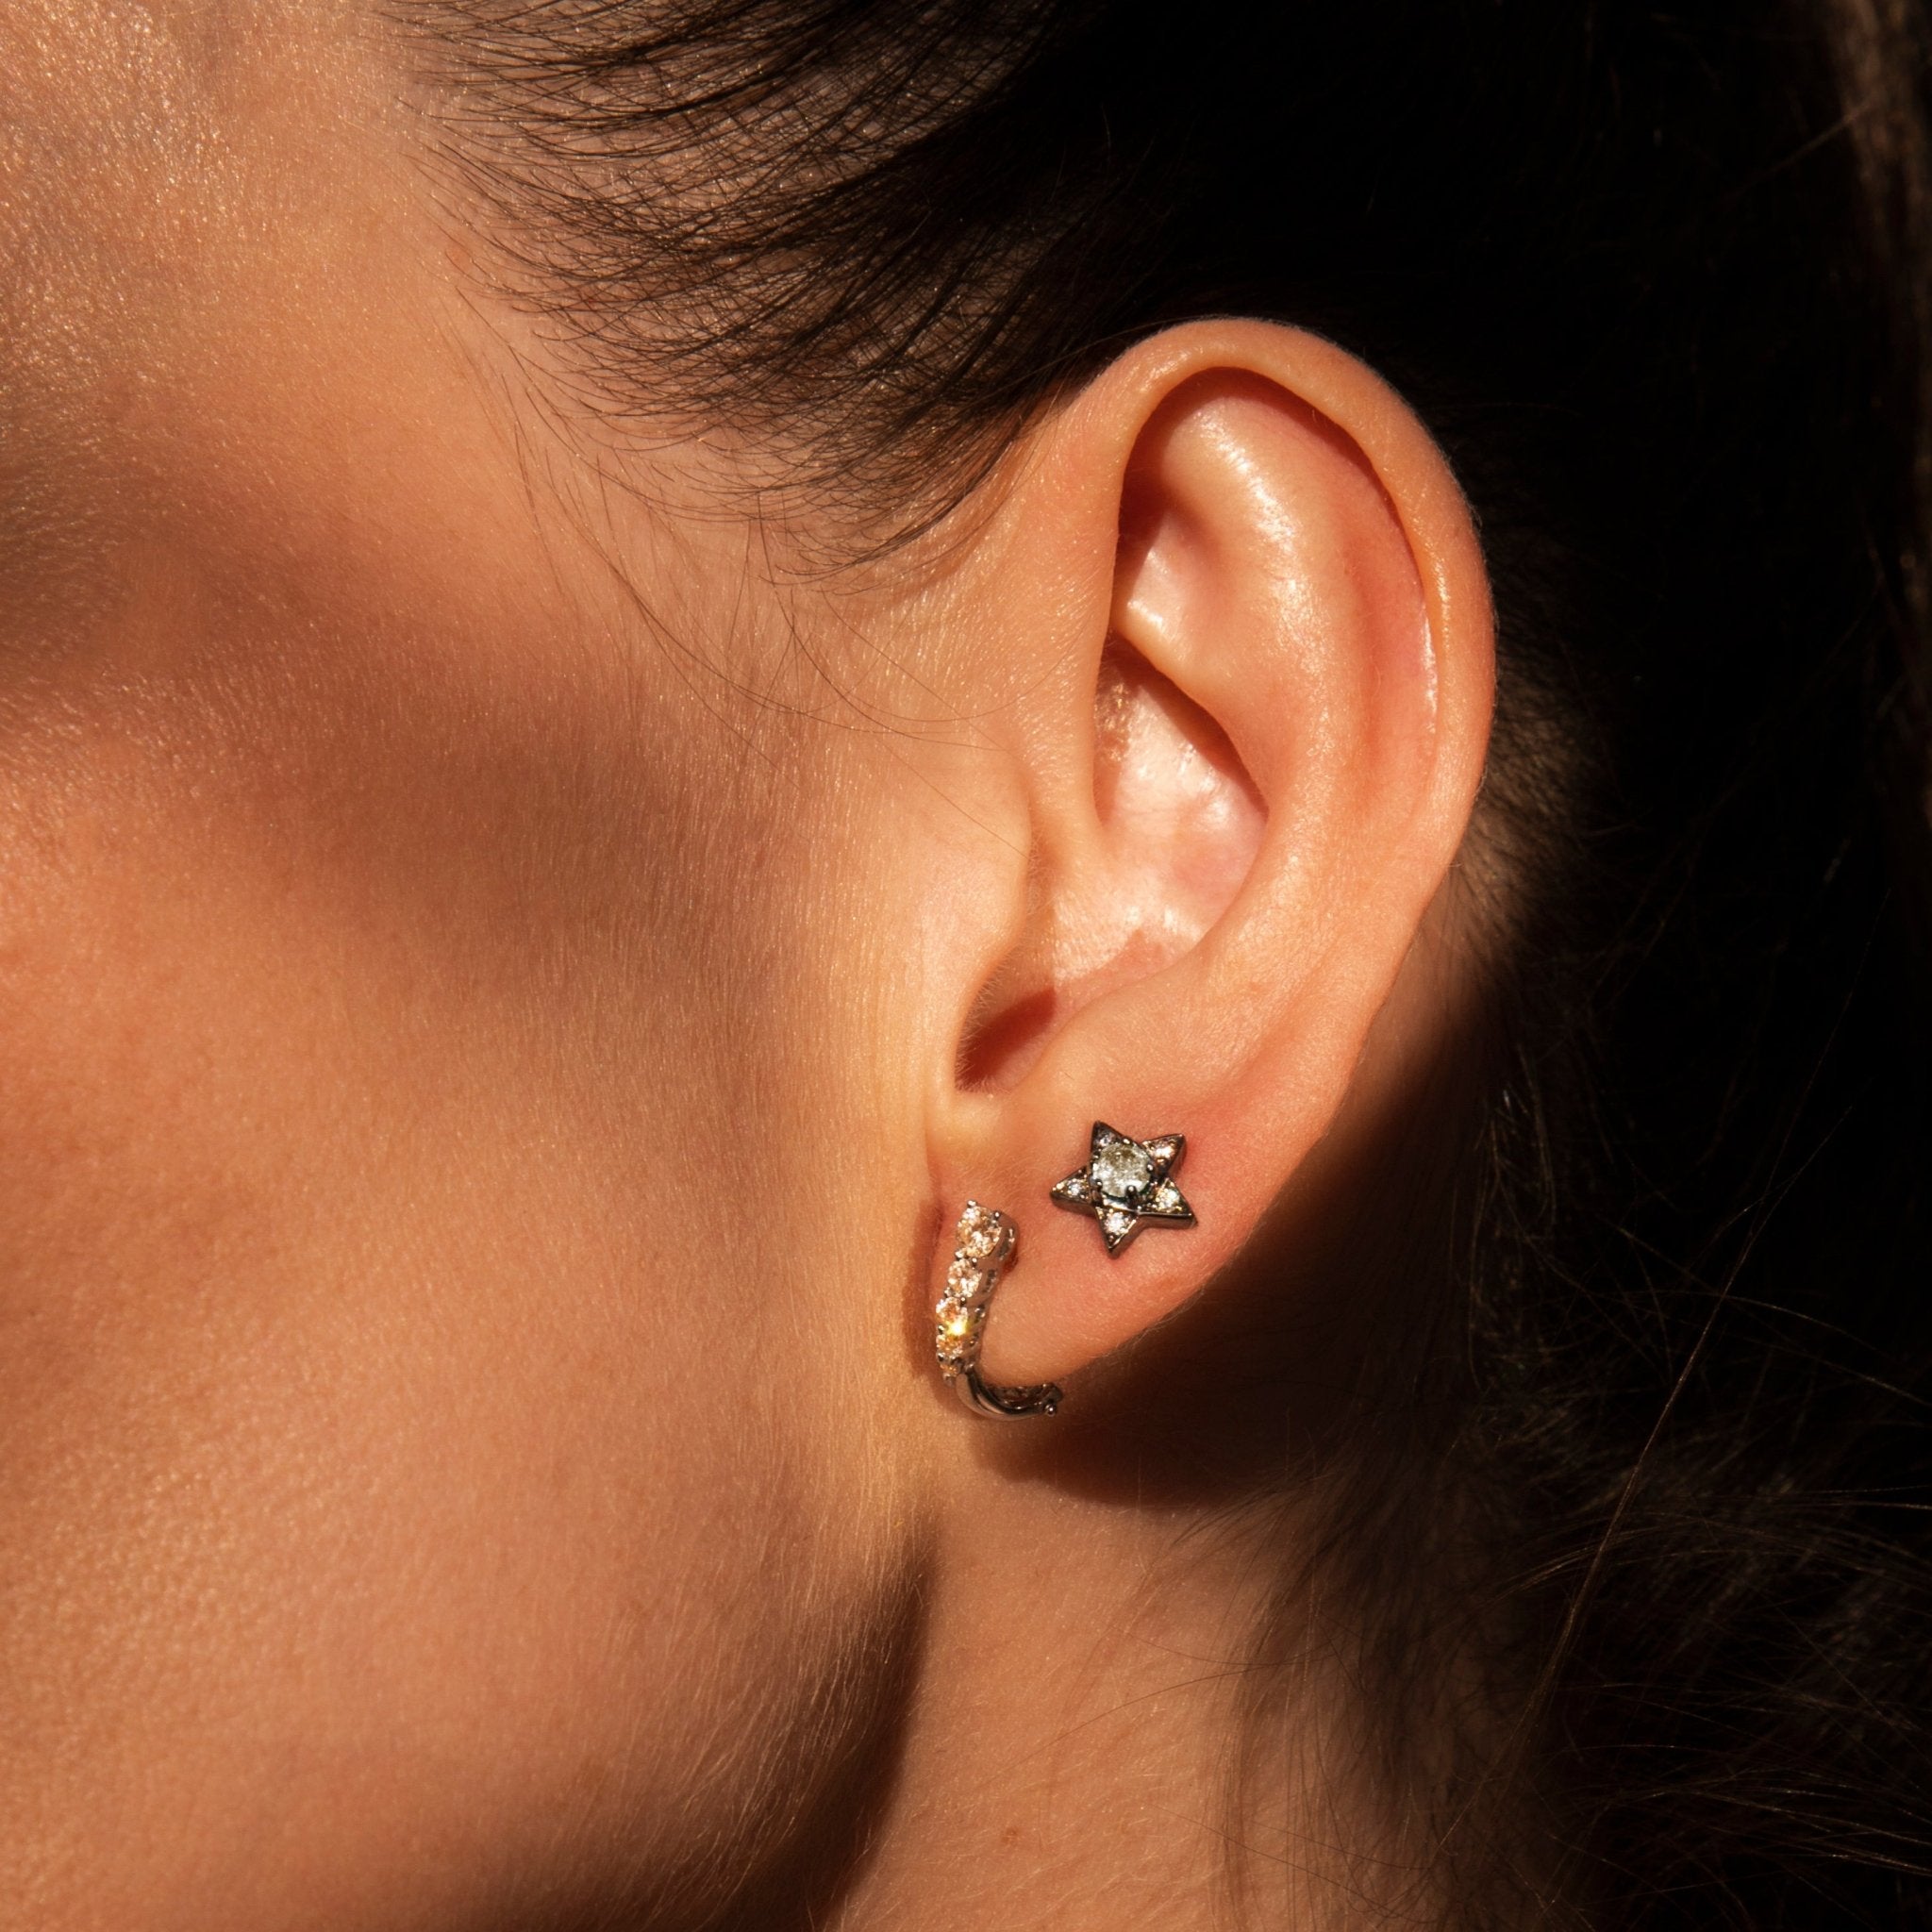 Brinco Ear Cuff Rock Star - P | Ouro Branco 18K com Ródio Negro e Diamantes - Jack Vartanian - Ear Cuffs